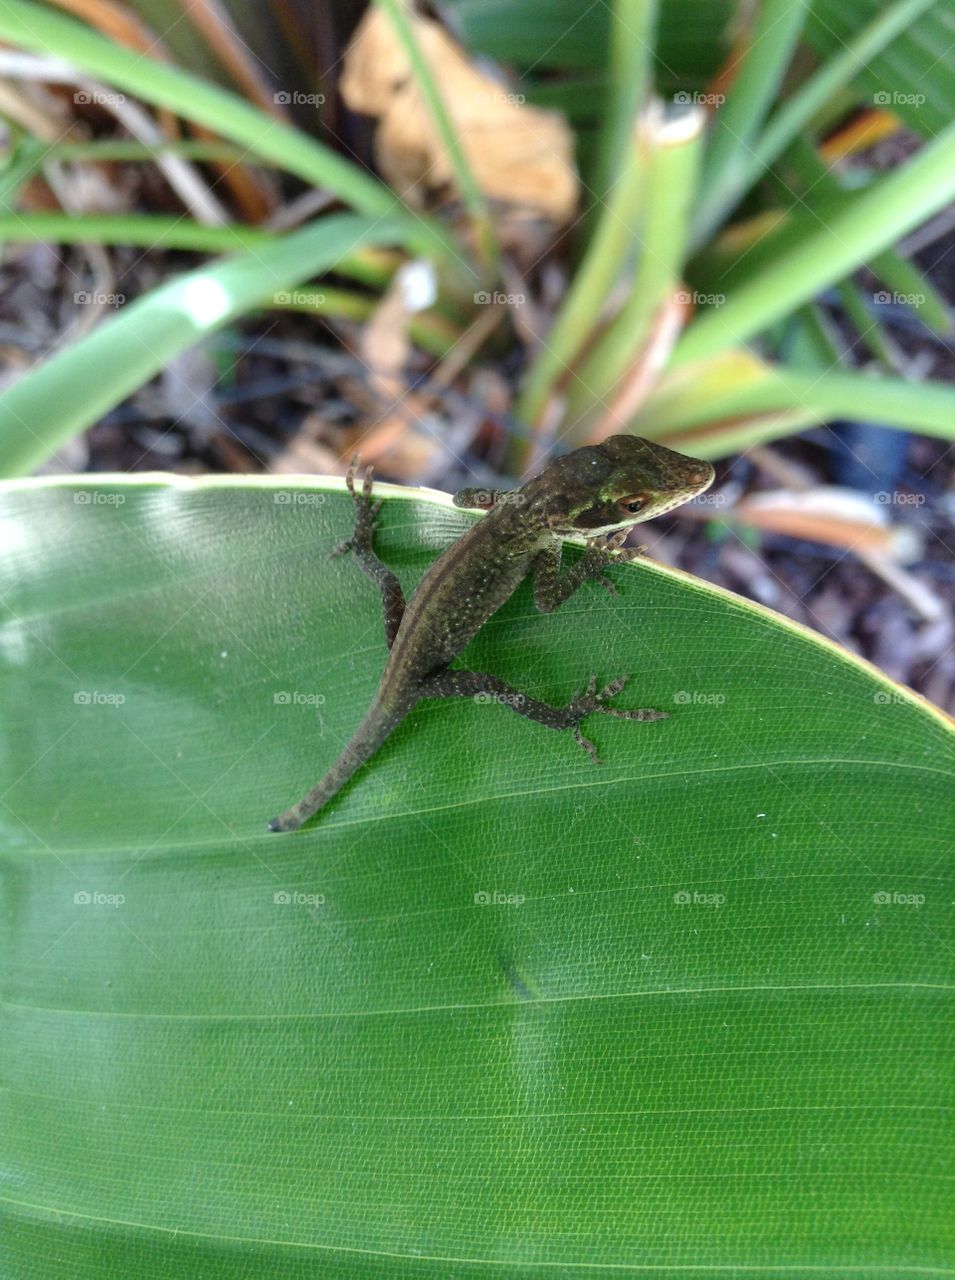 lizard in new orleans